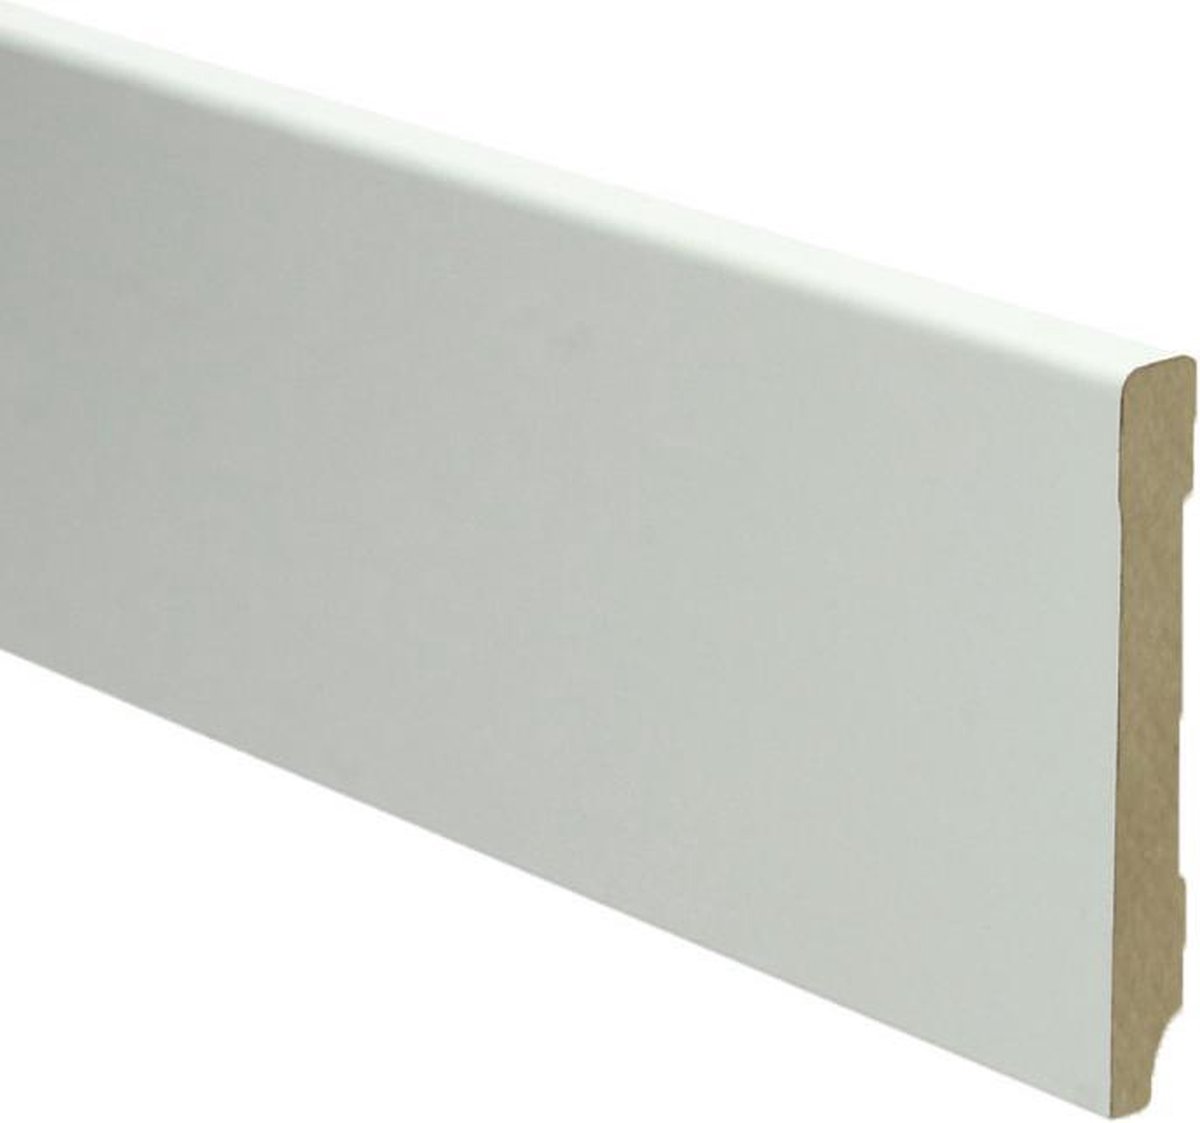 Hoge plinten - MDF - Moderne plint 90x12 mm - Wit - Voorgelakt - RAL 9010 - Per 5 stuks 2,4m